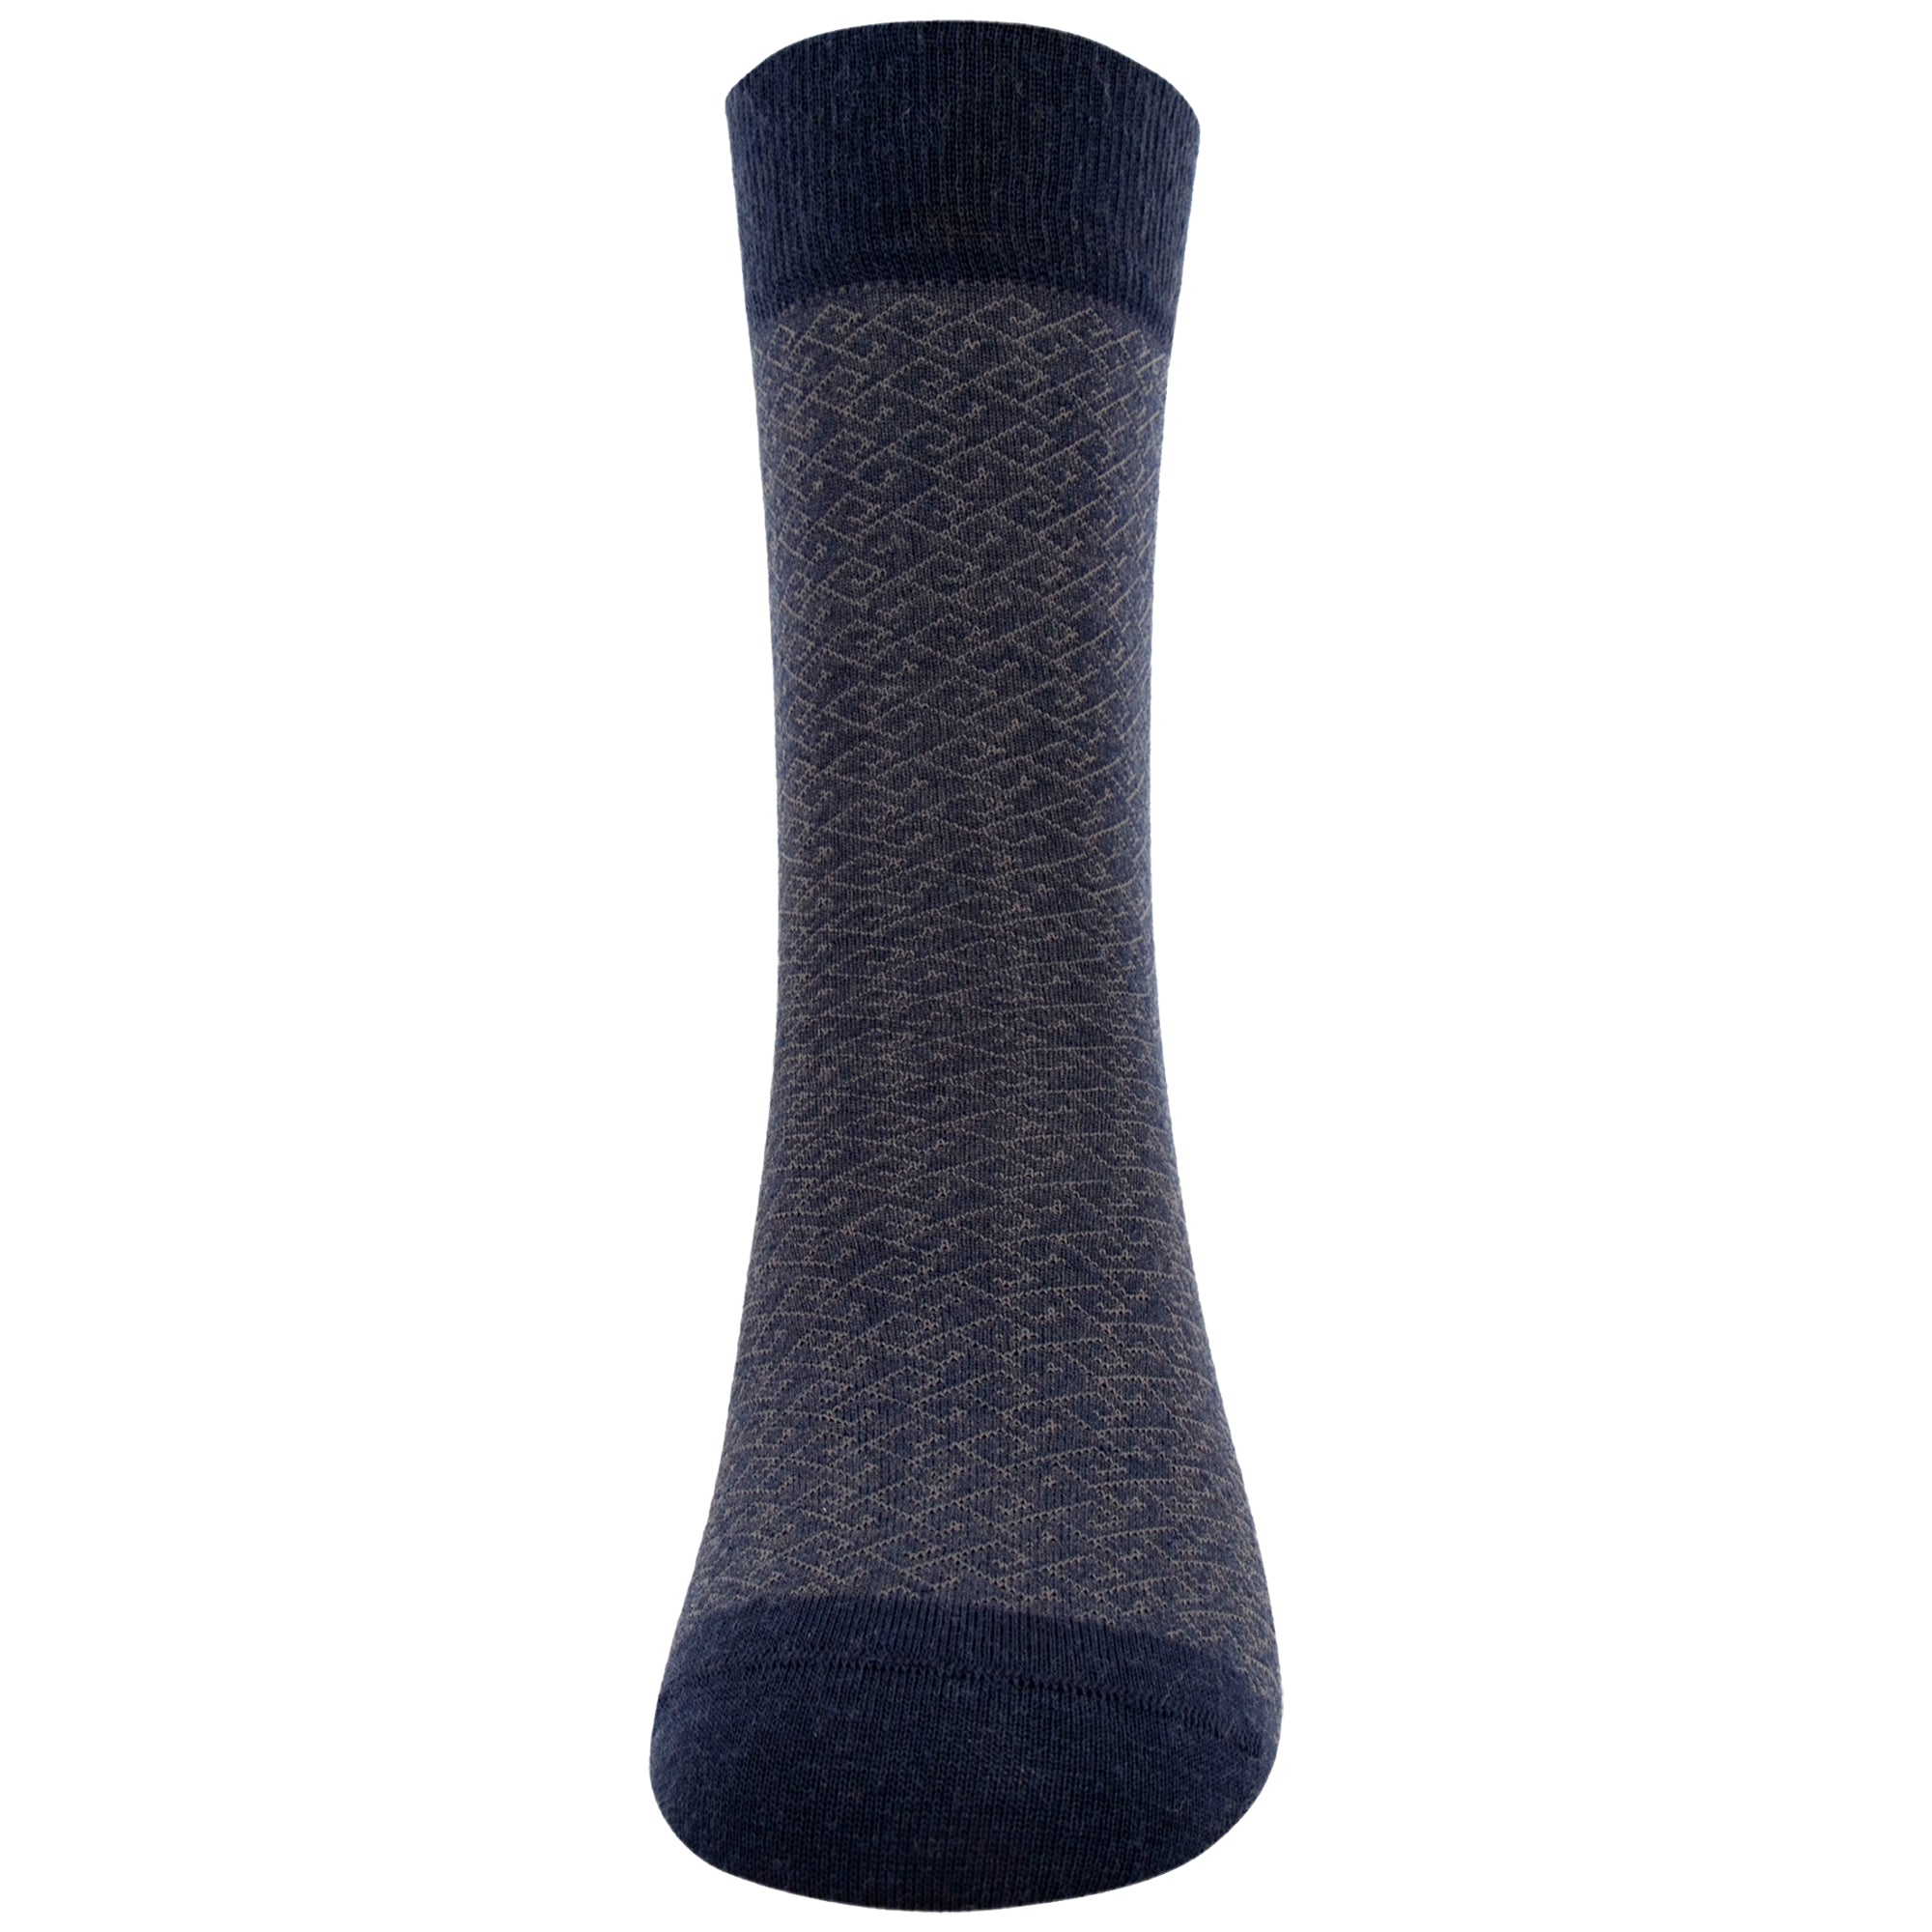 Men's Merino Wool Abstract Fashion Standard Length Socks